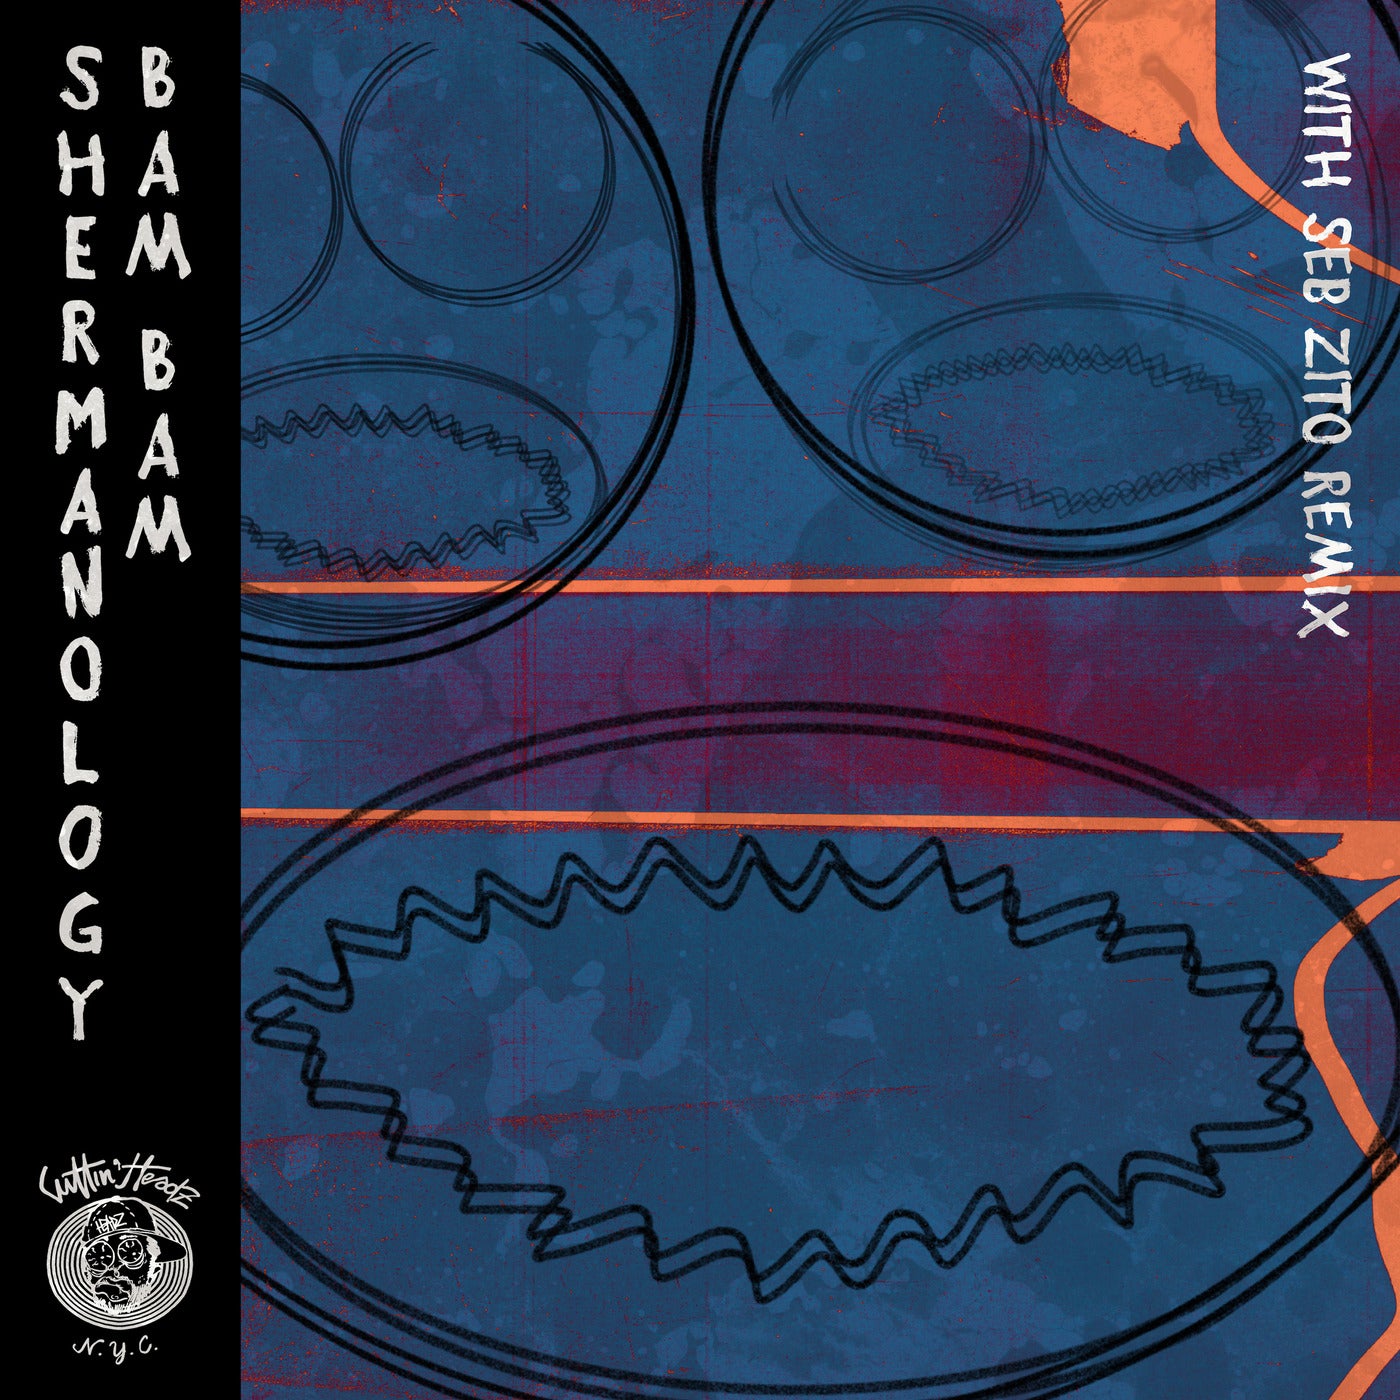 Download Shermanology - BAM BAM on Electrobuzz